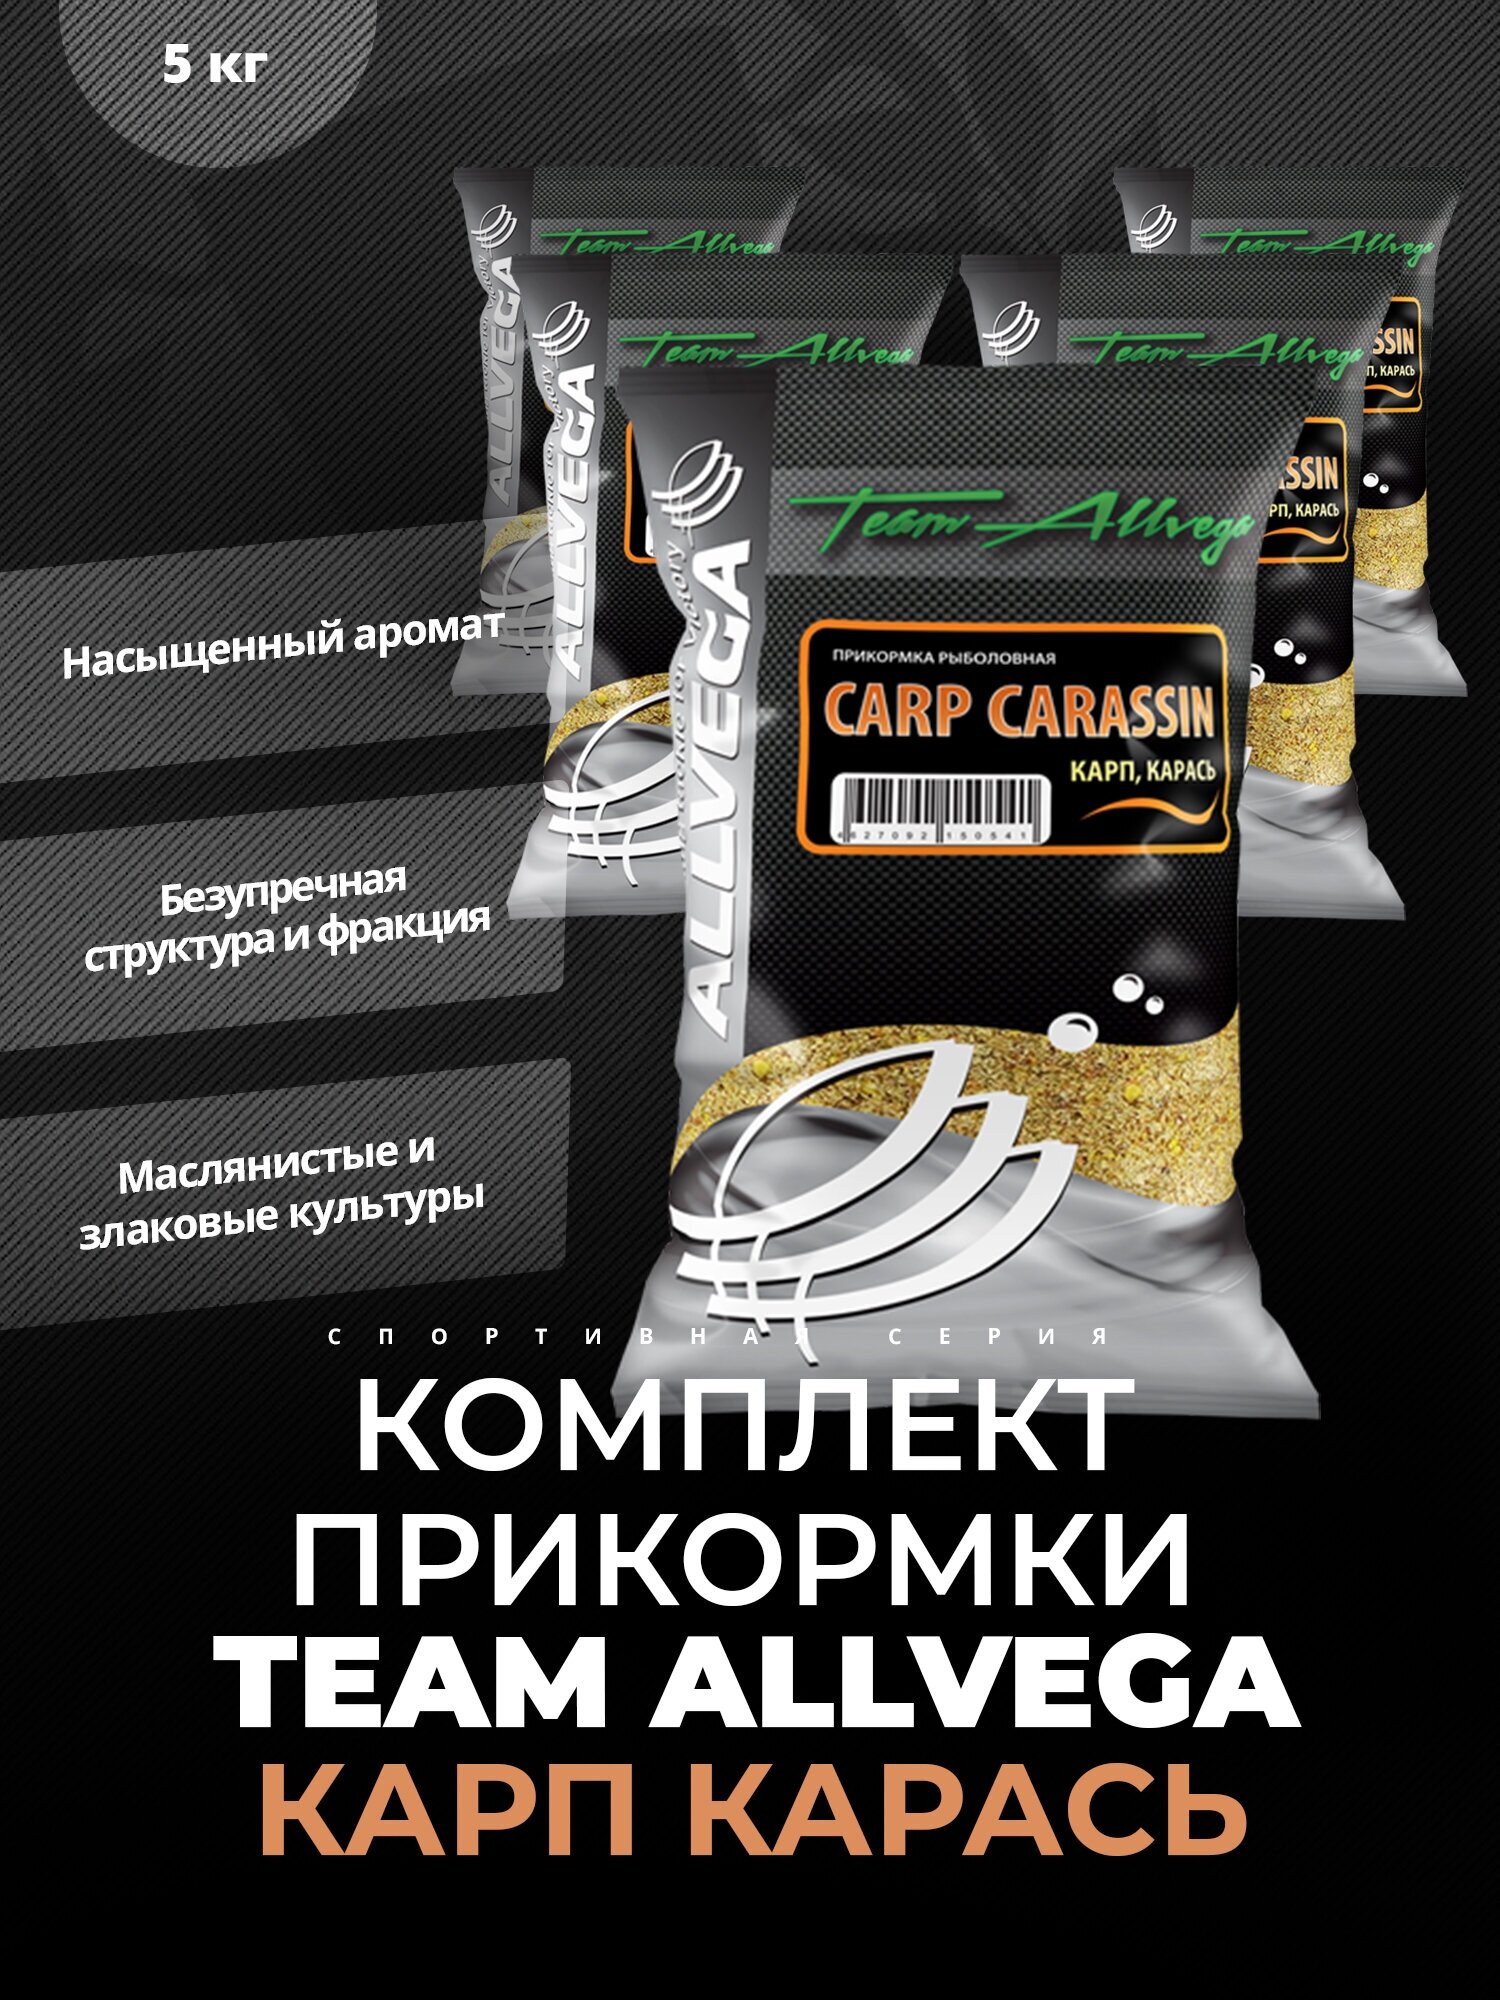 Прикормка ALLVEGA "Team Allvega Carp Carassin" 1кг (карп, карась) 5 пакетов по 1 кг